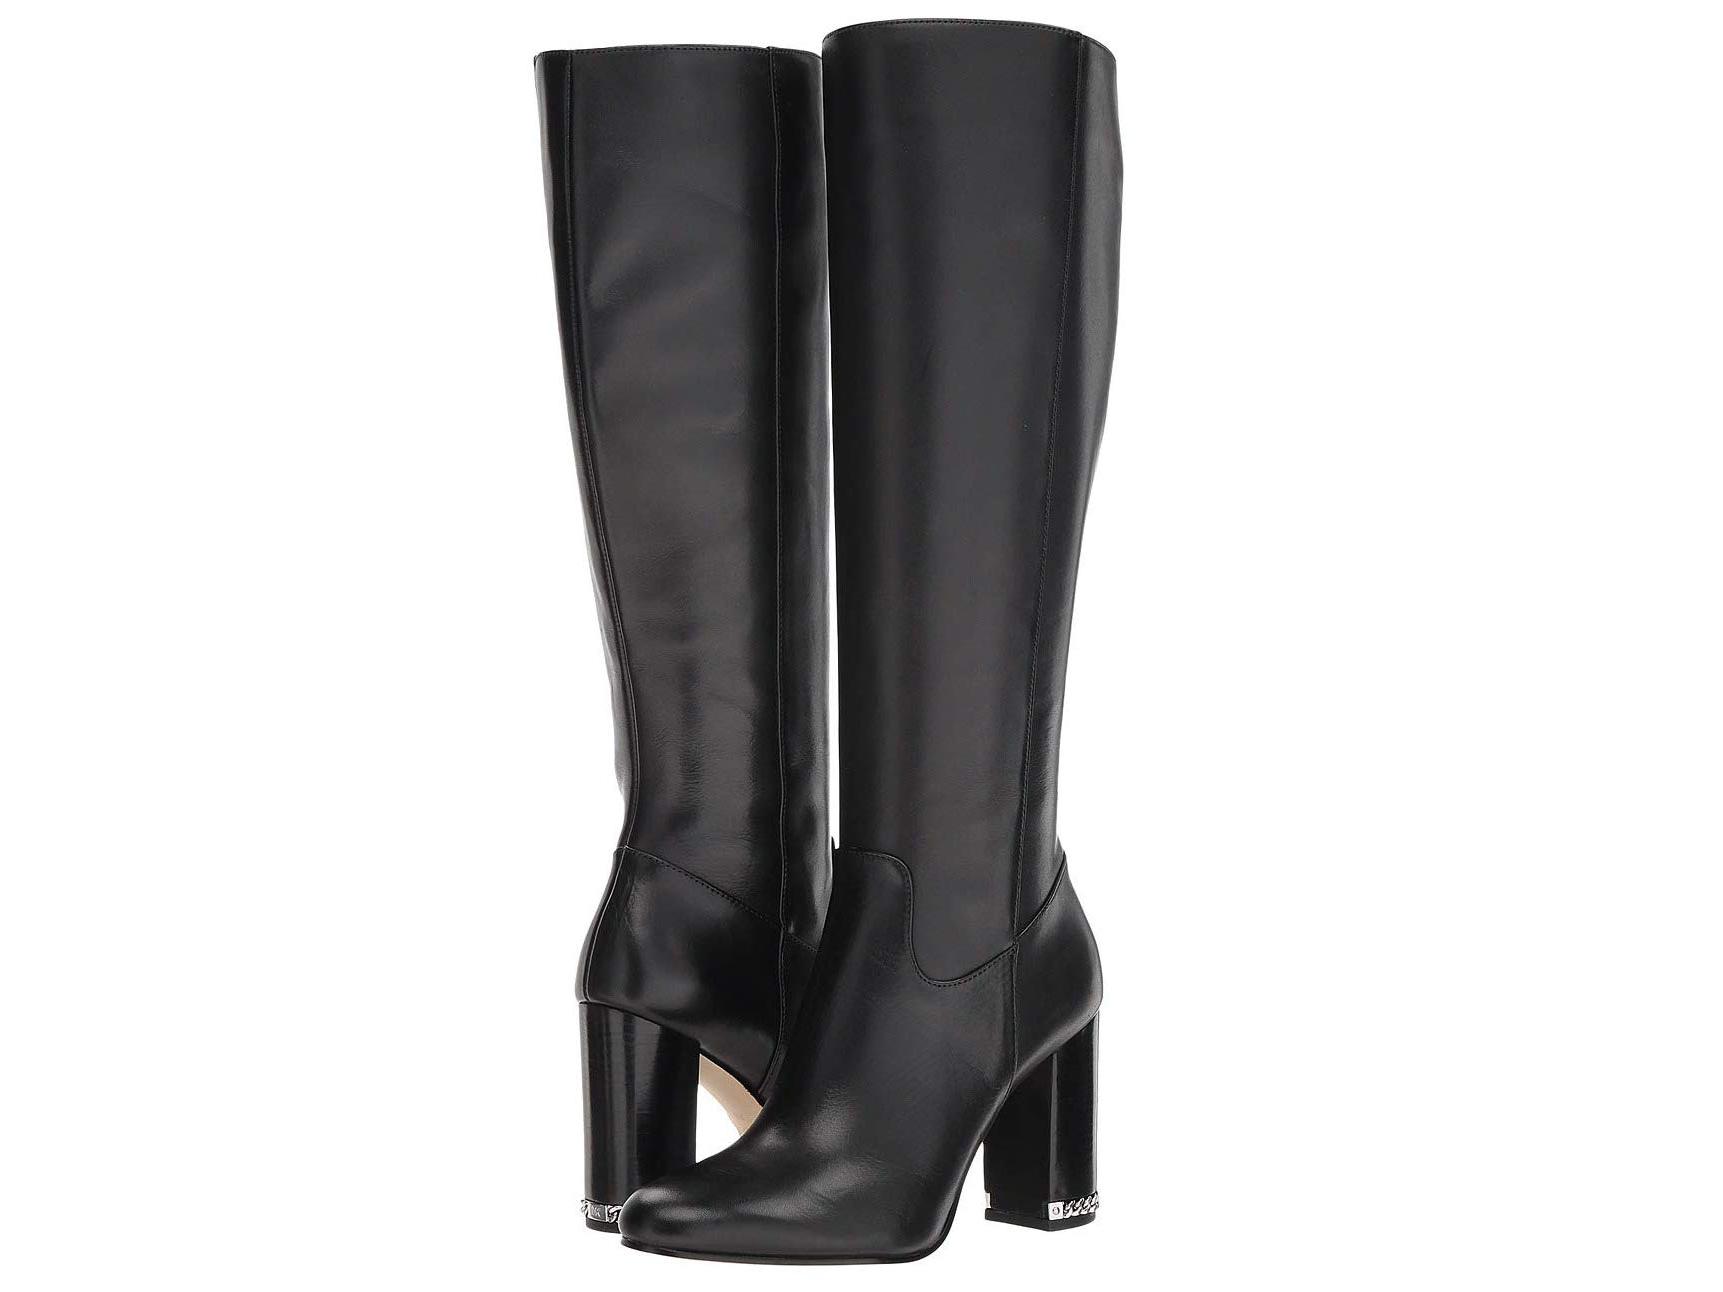 Michael Kors Womens Walker Leather Almond Toe Knee High Fashion, Black, Size 9.5 - image 1 of 6